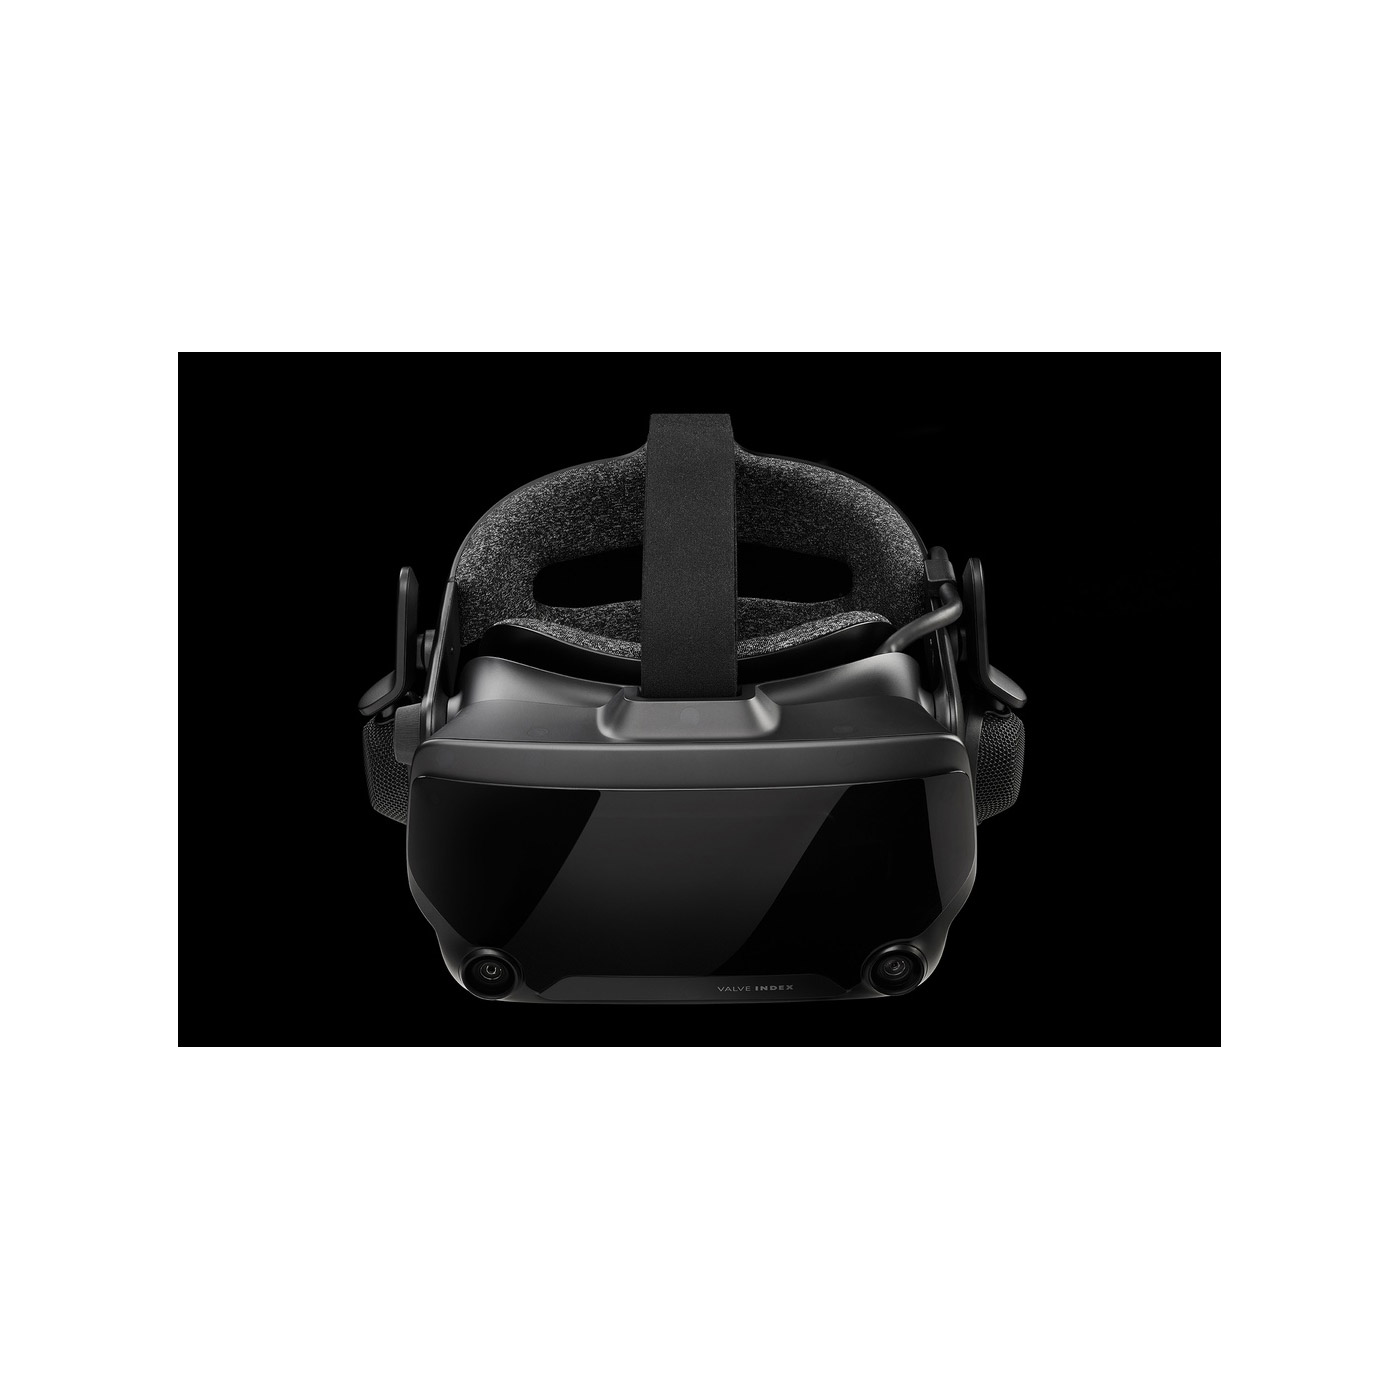 Valve index VR kit